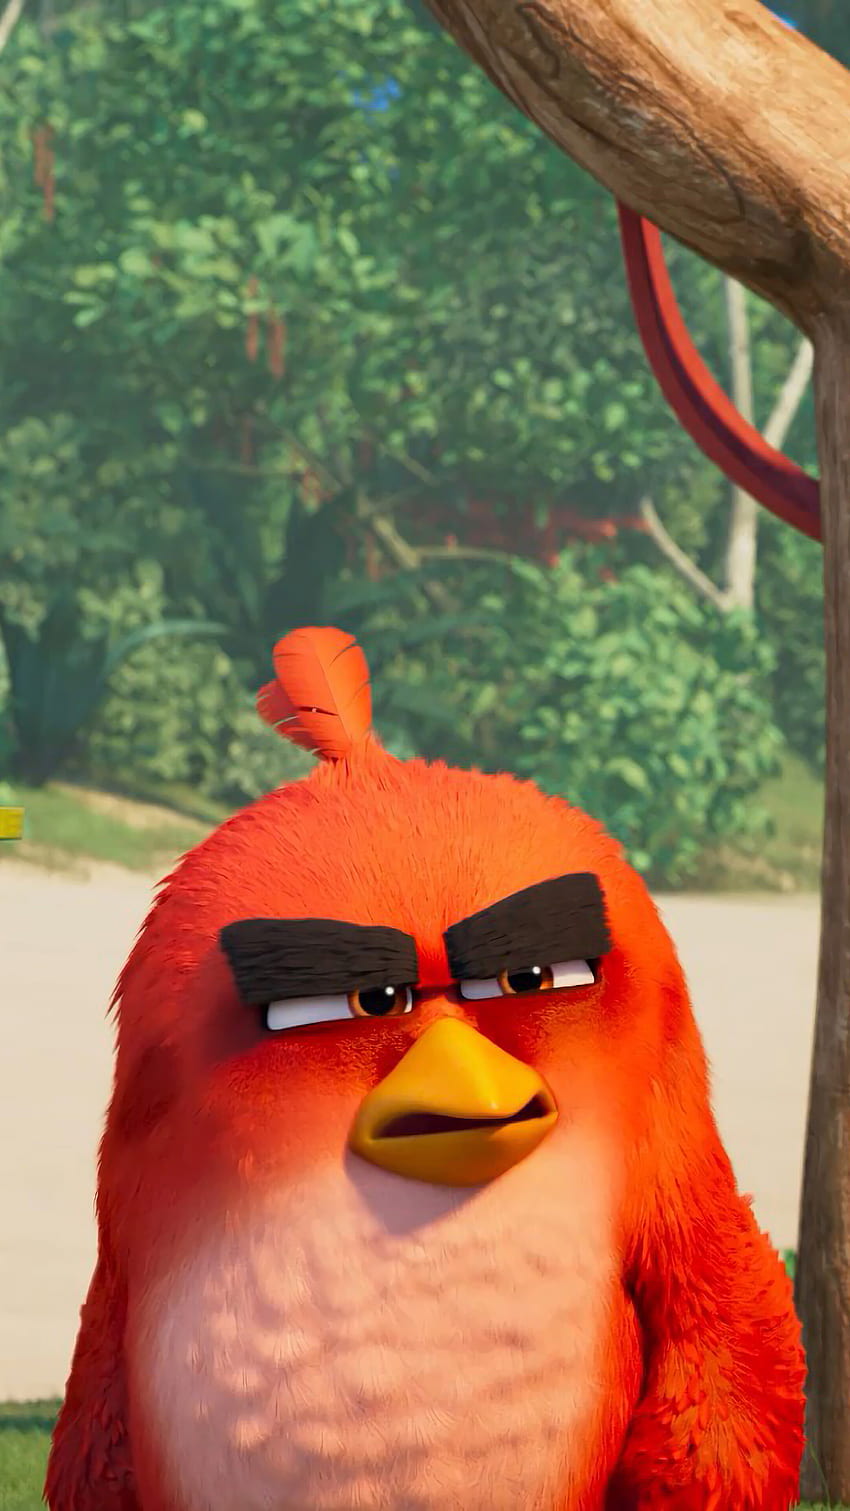 Film Angry Birds 2, Bom, Merah, Chuck, telepon, , Latar Belakang, dan , Angry Birds Red wallpaper ponsel HD